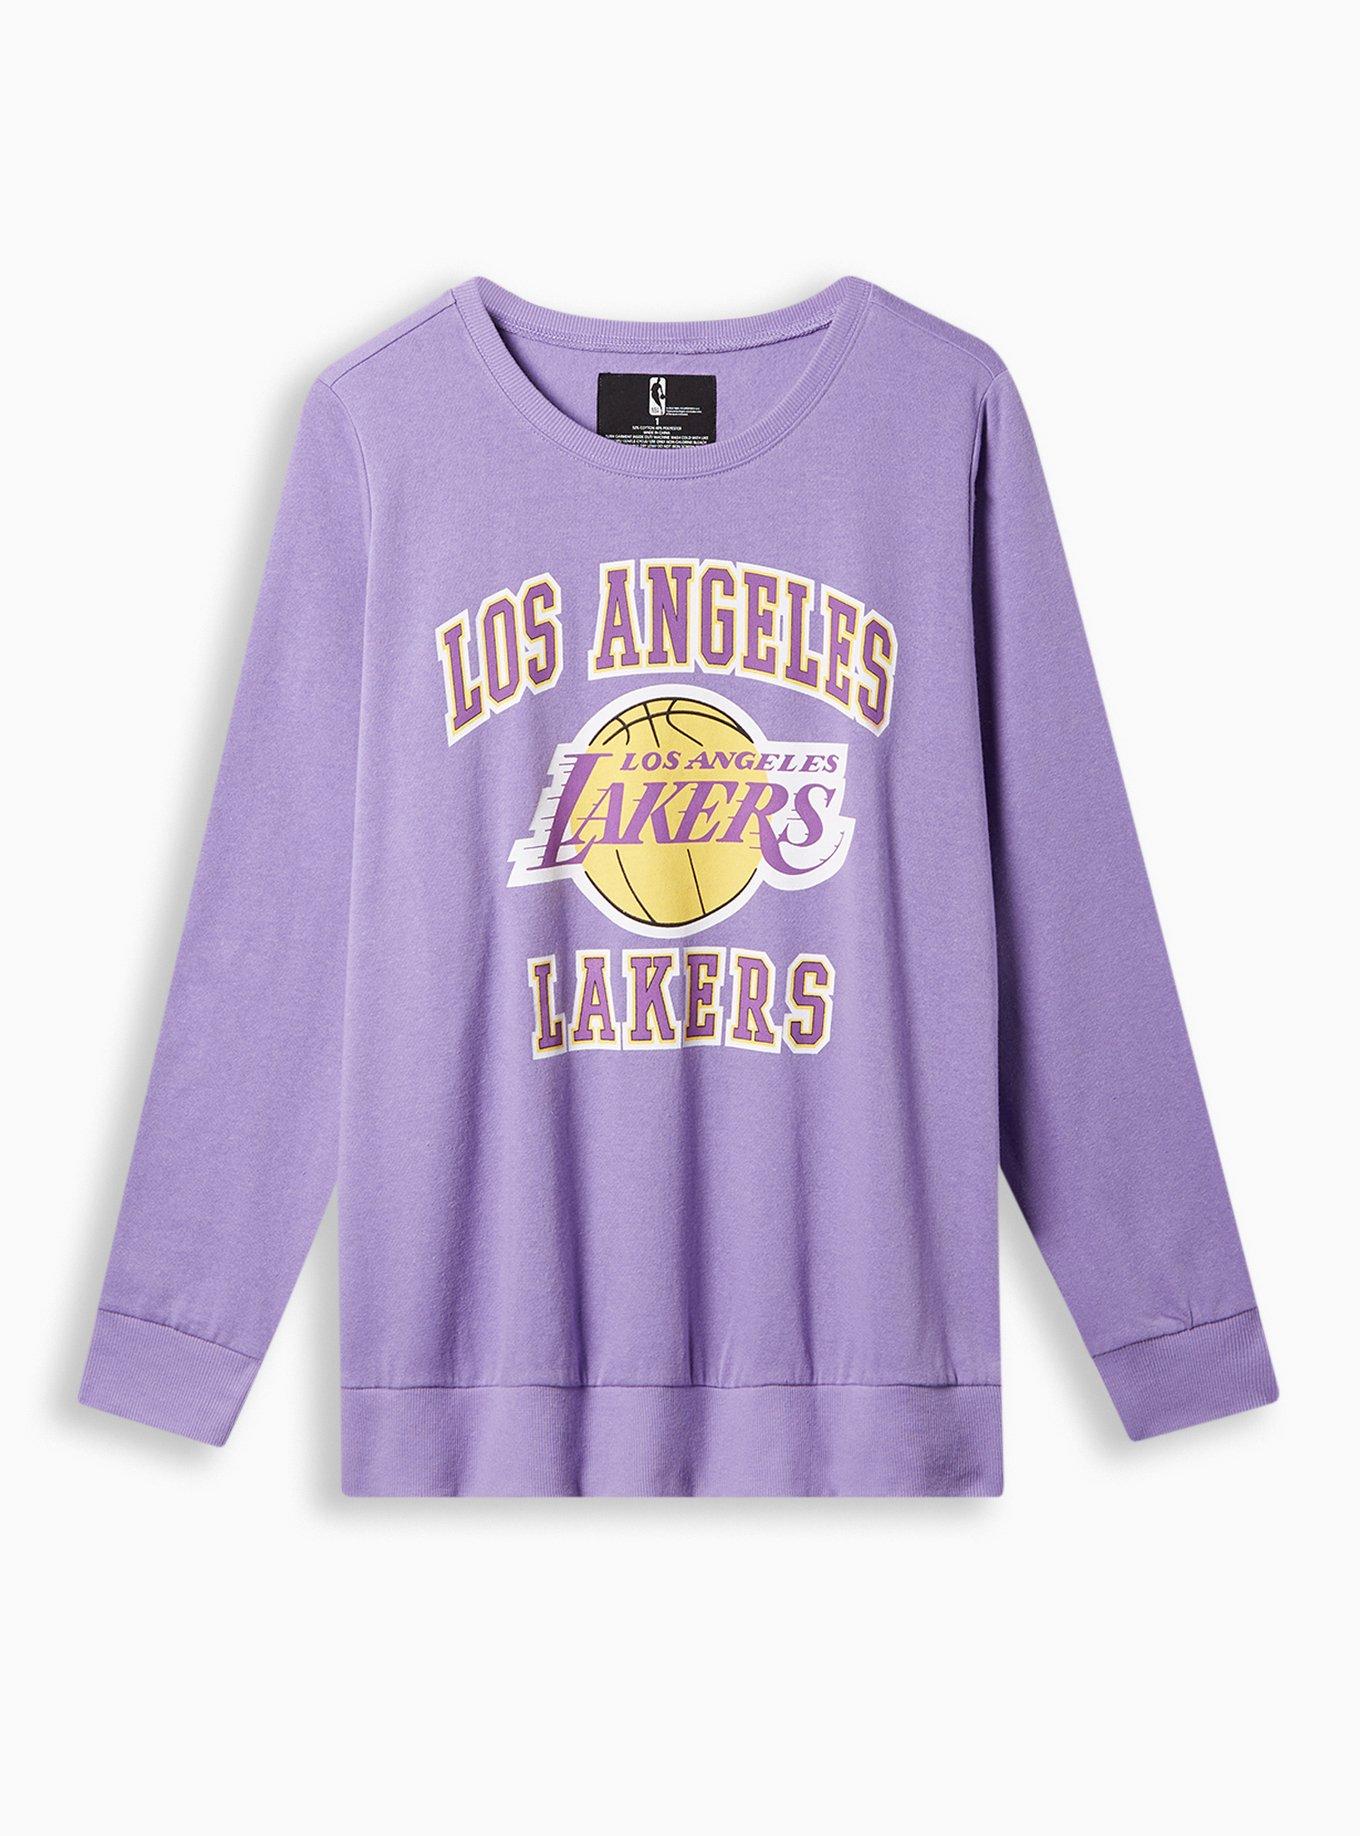 Plus Size - NBA Los Angeles Lakers Purple V-Neck Tee - Torrid